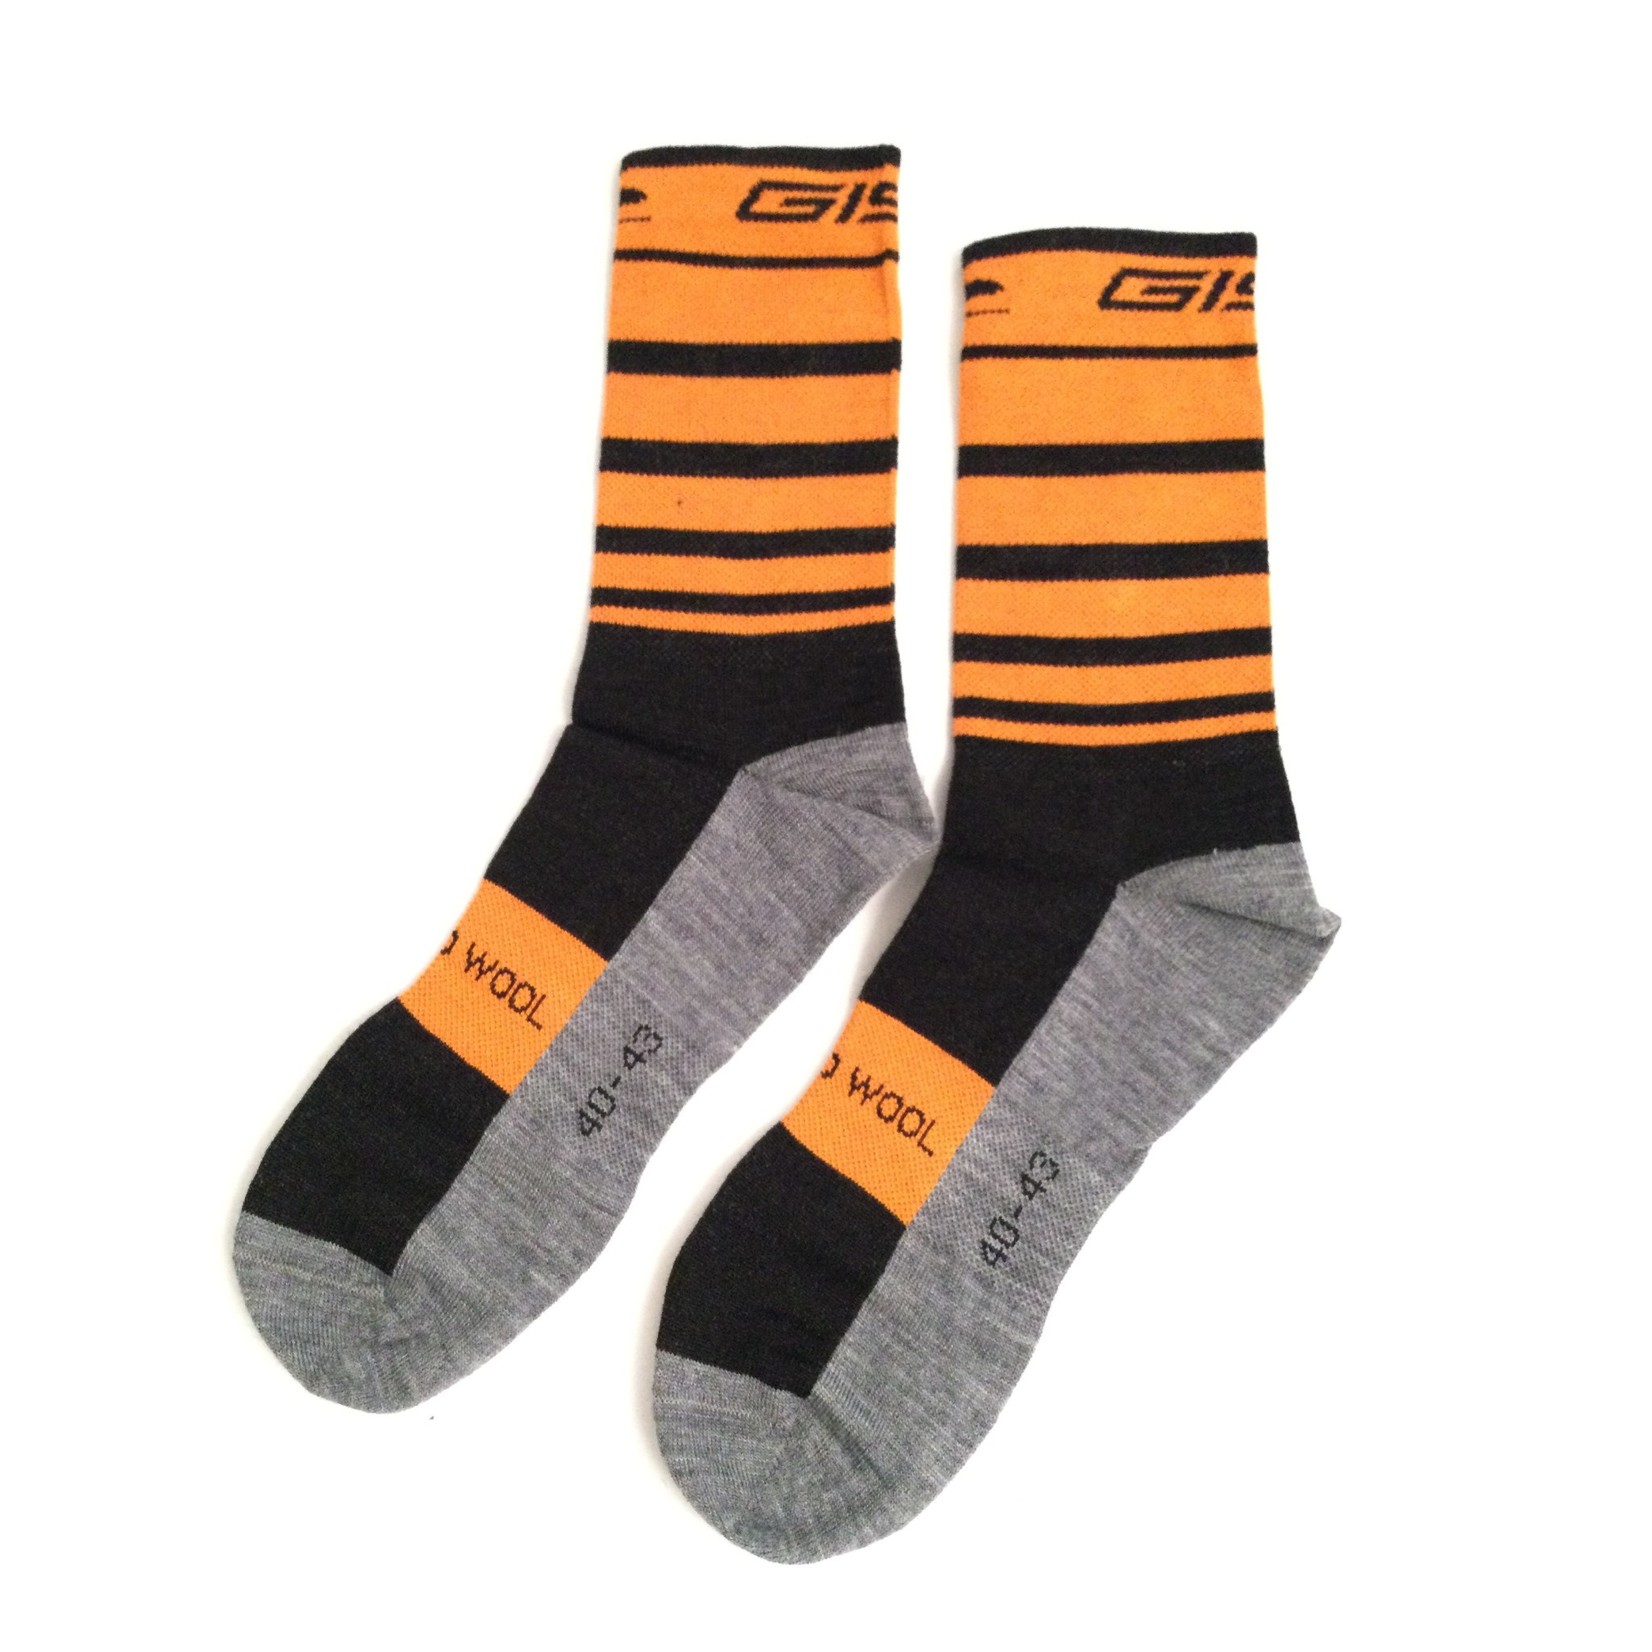 Gist Gist Climatic Socks 5873